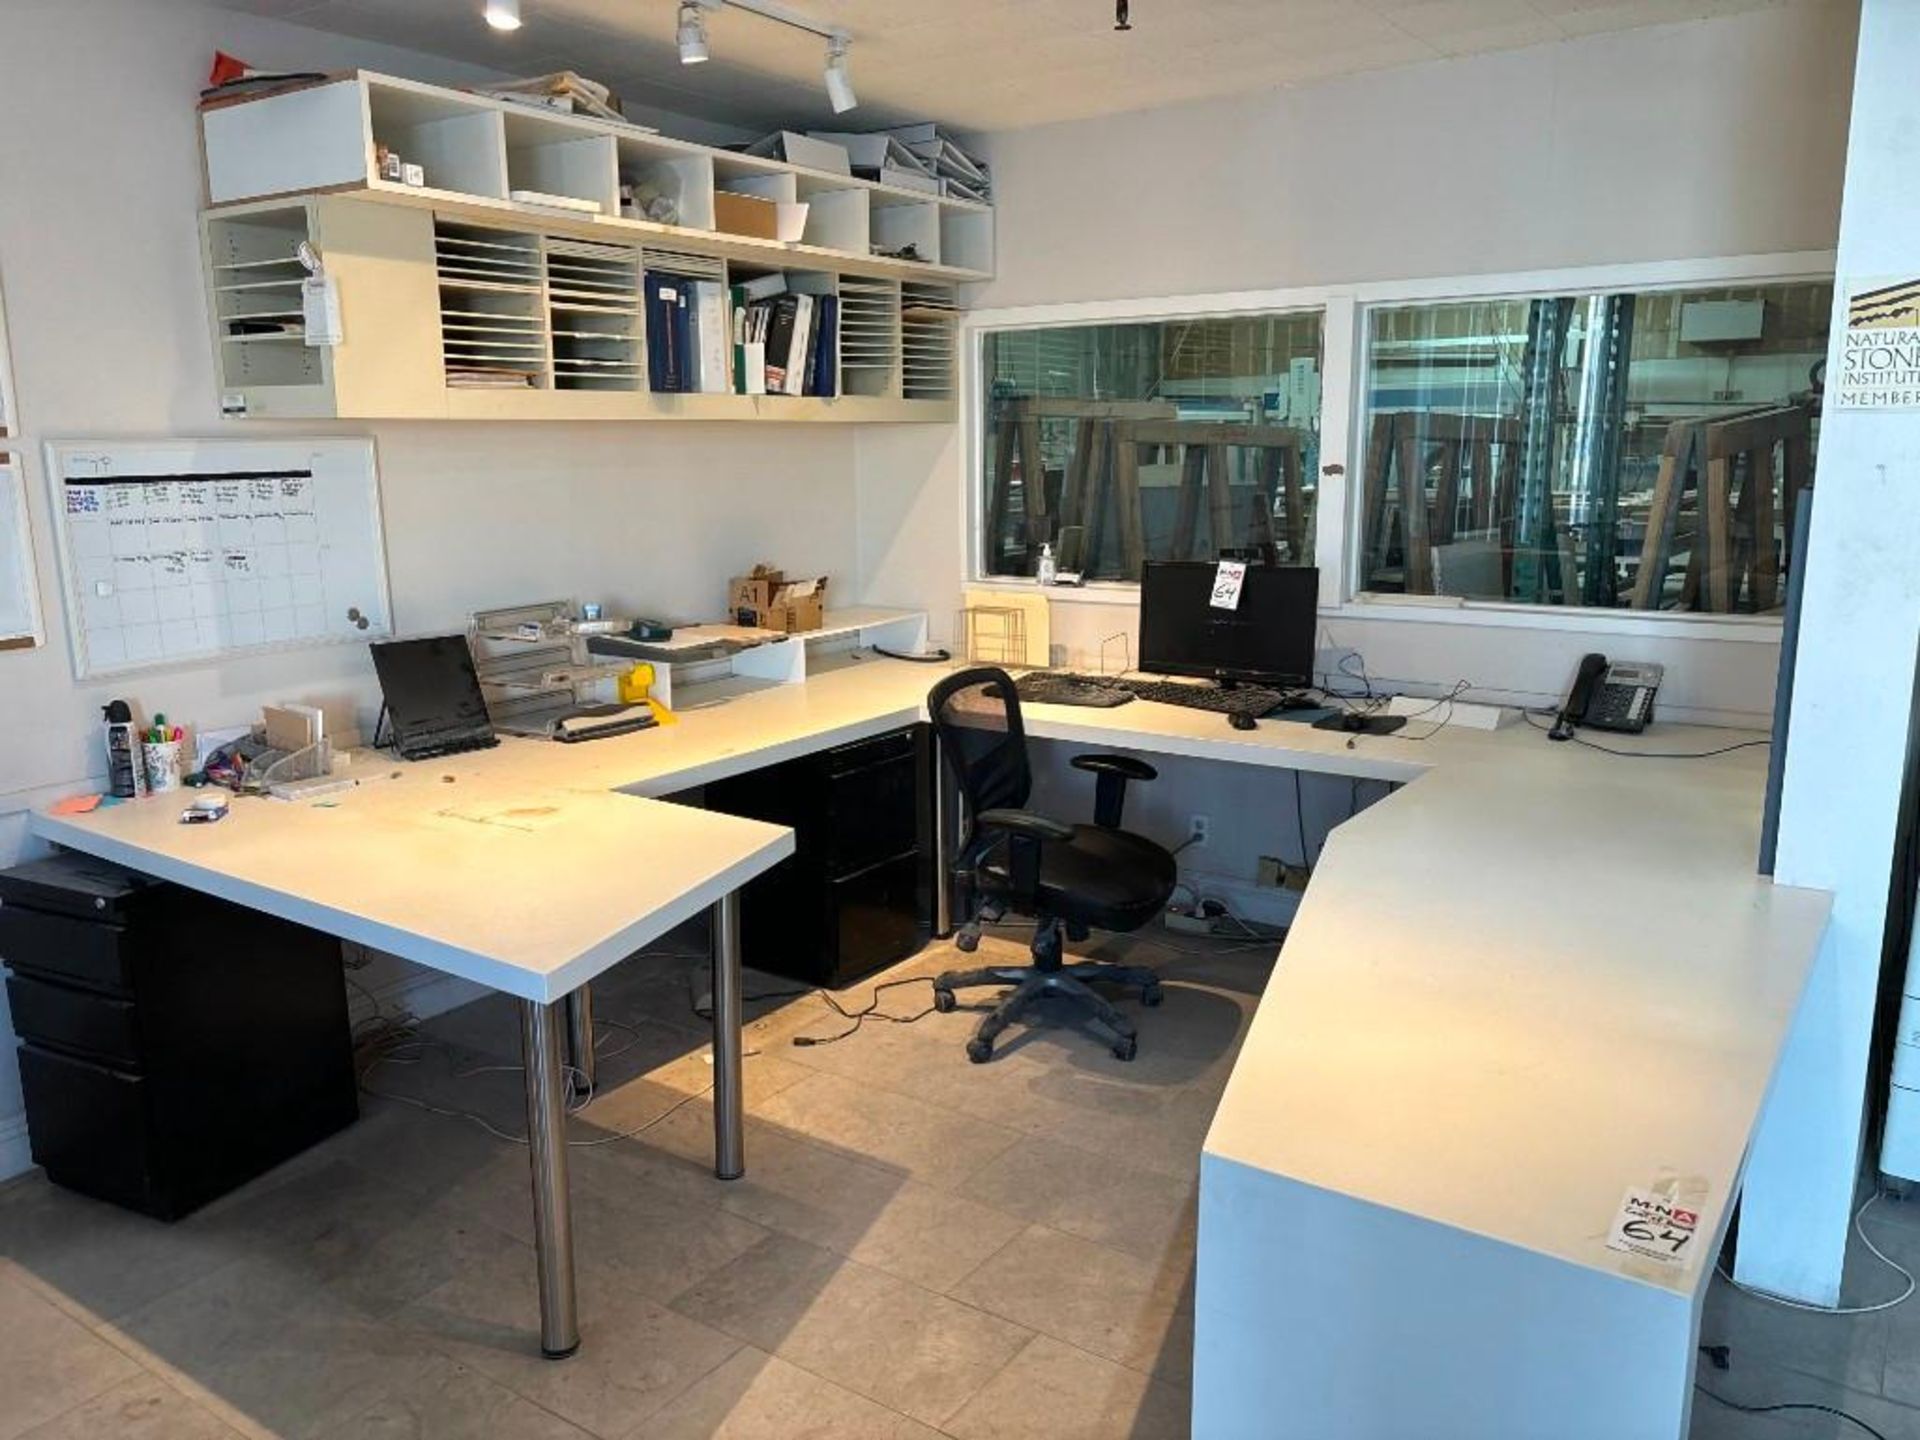 Room Content: Desks, Chairs, Monitors